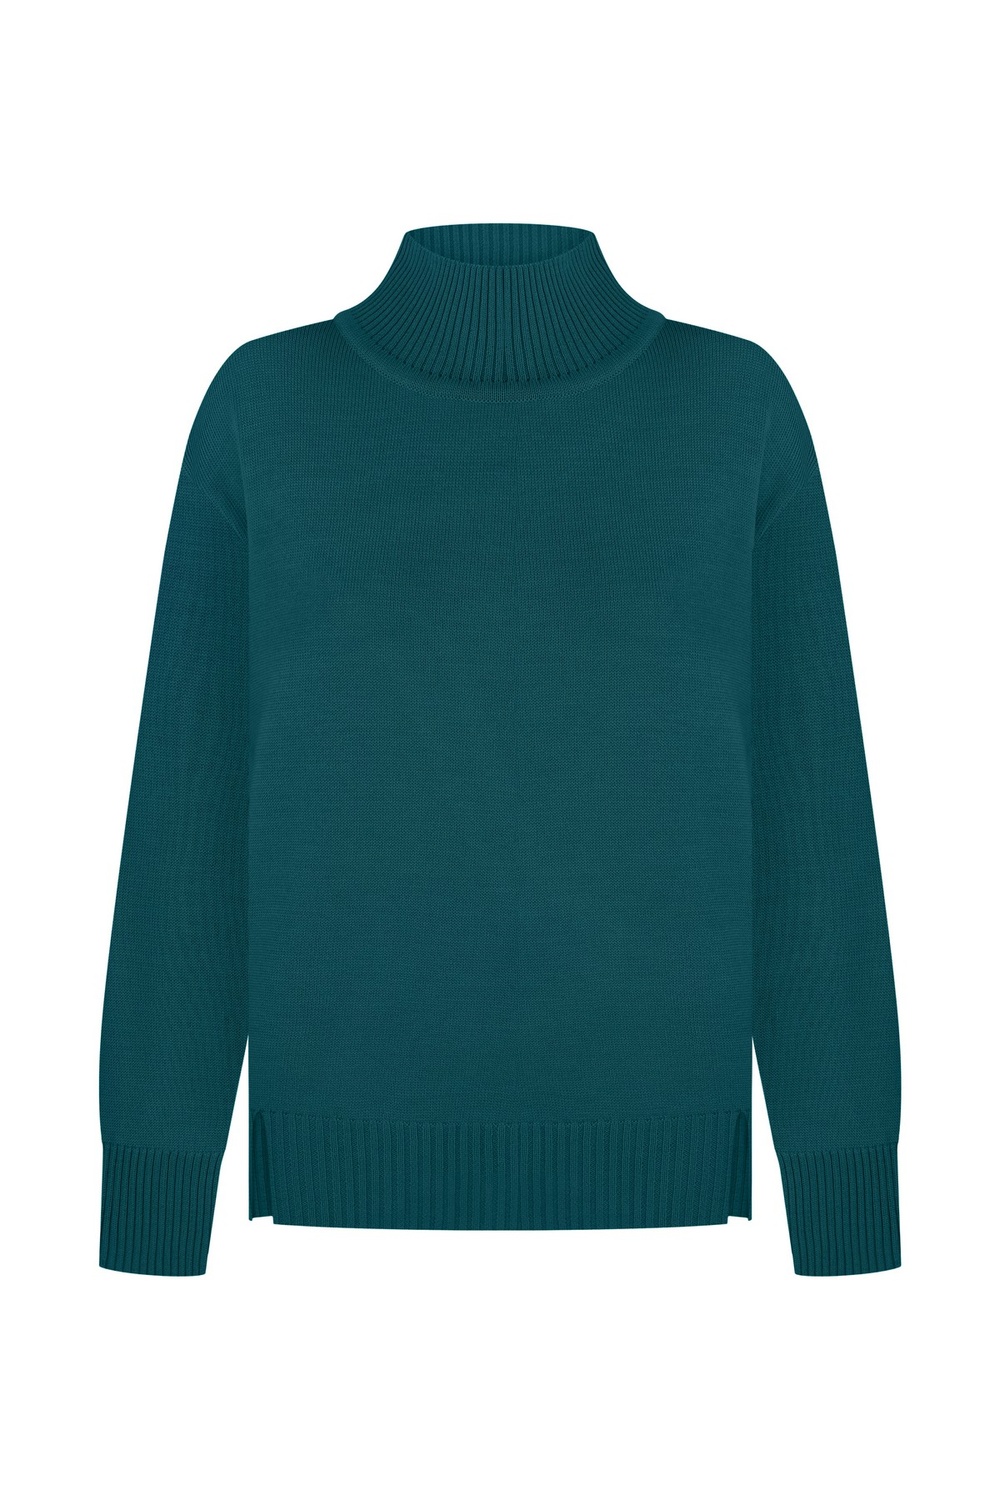 Свитер вязаный из полушерсти мериноса 17 оттенков Sweater_knitted фото